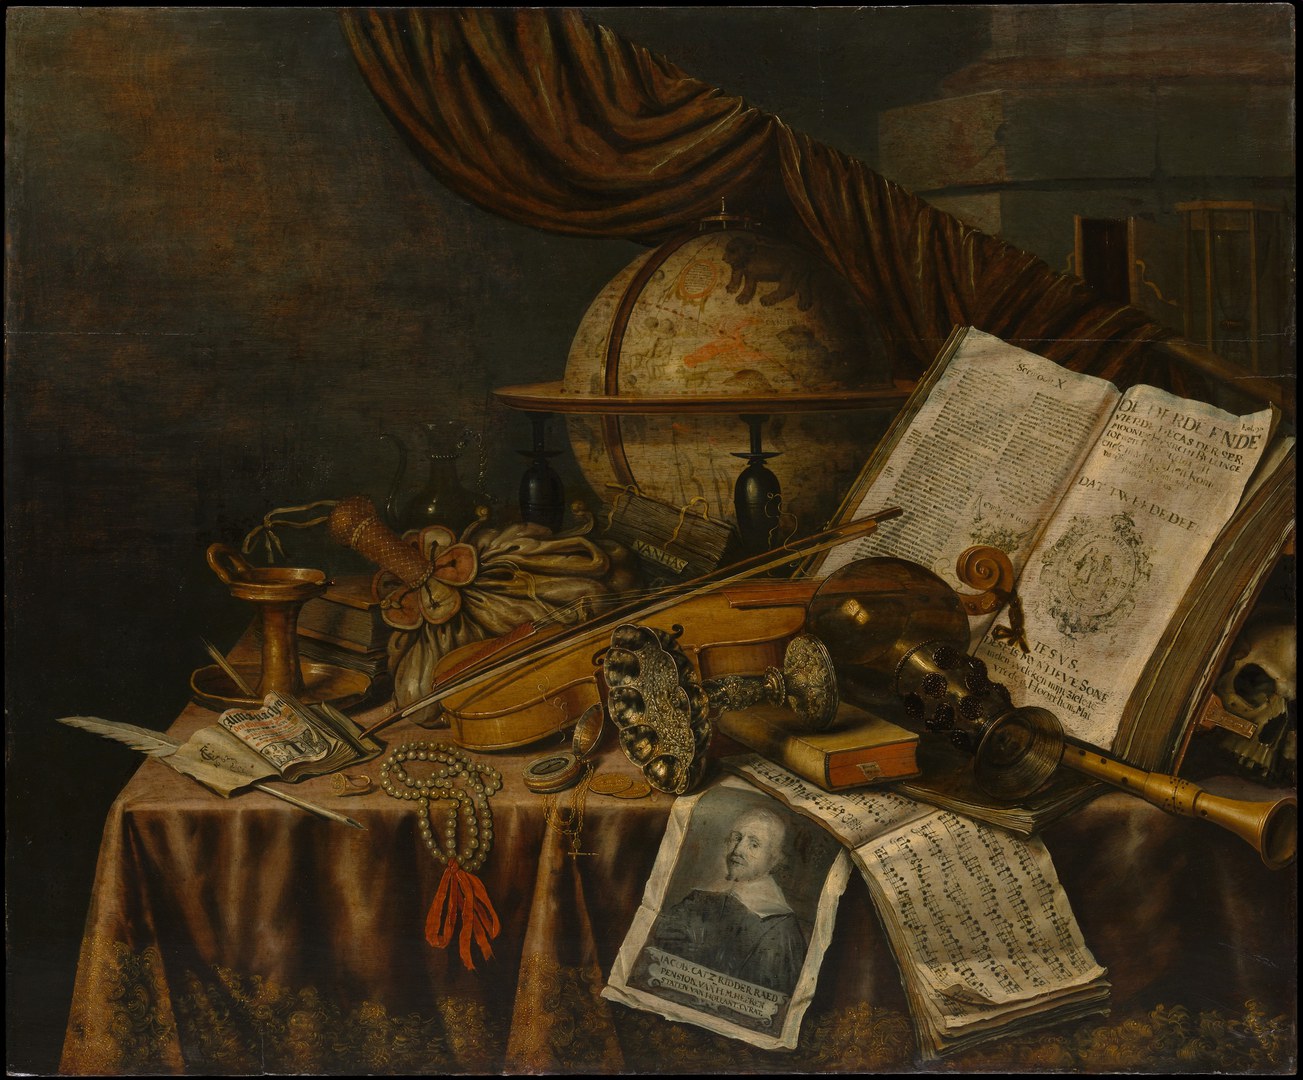 Edwaert Collier: Vanitas Still Life (1662)